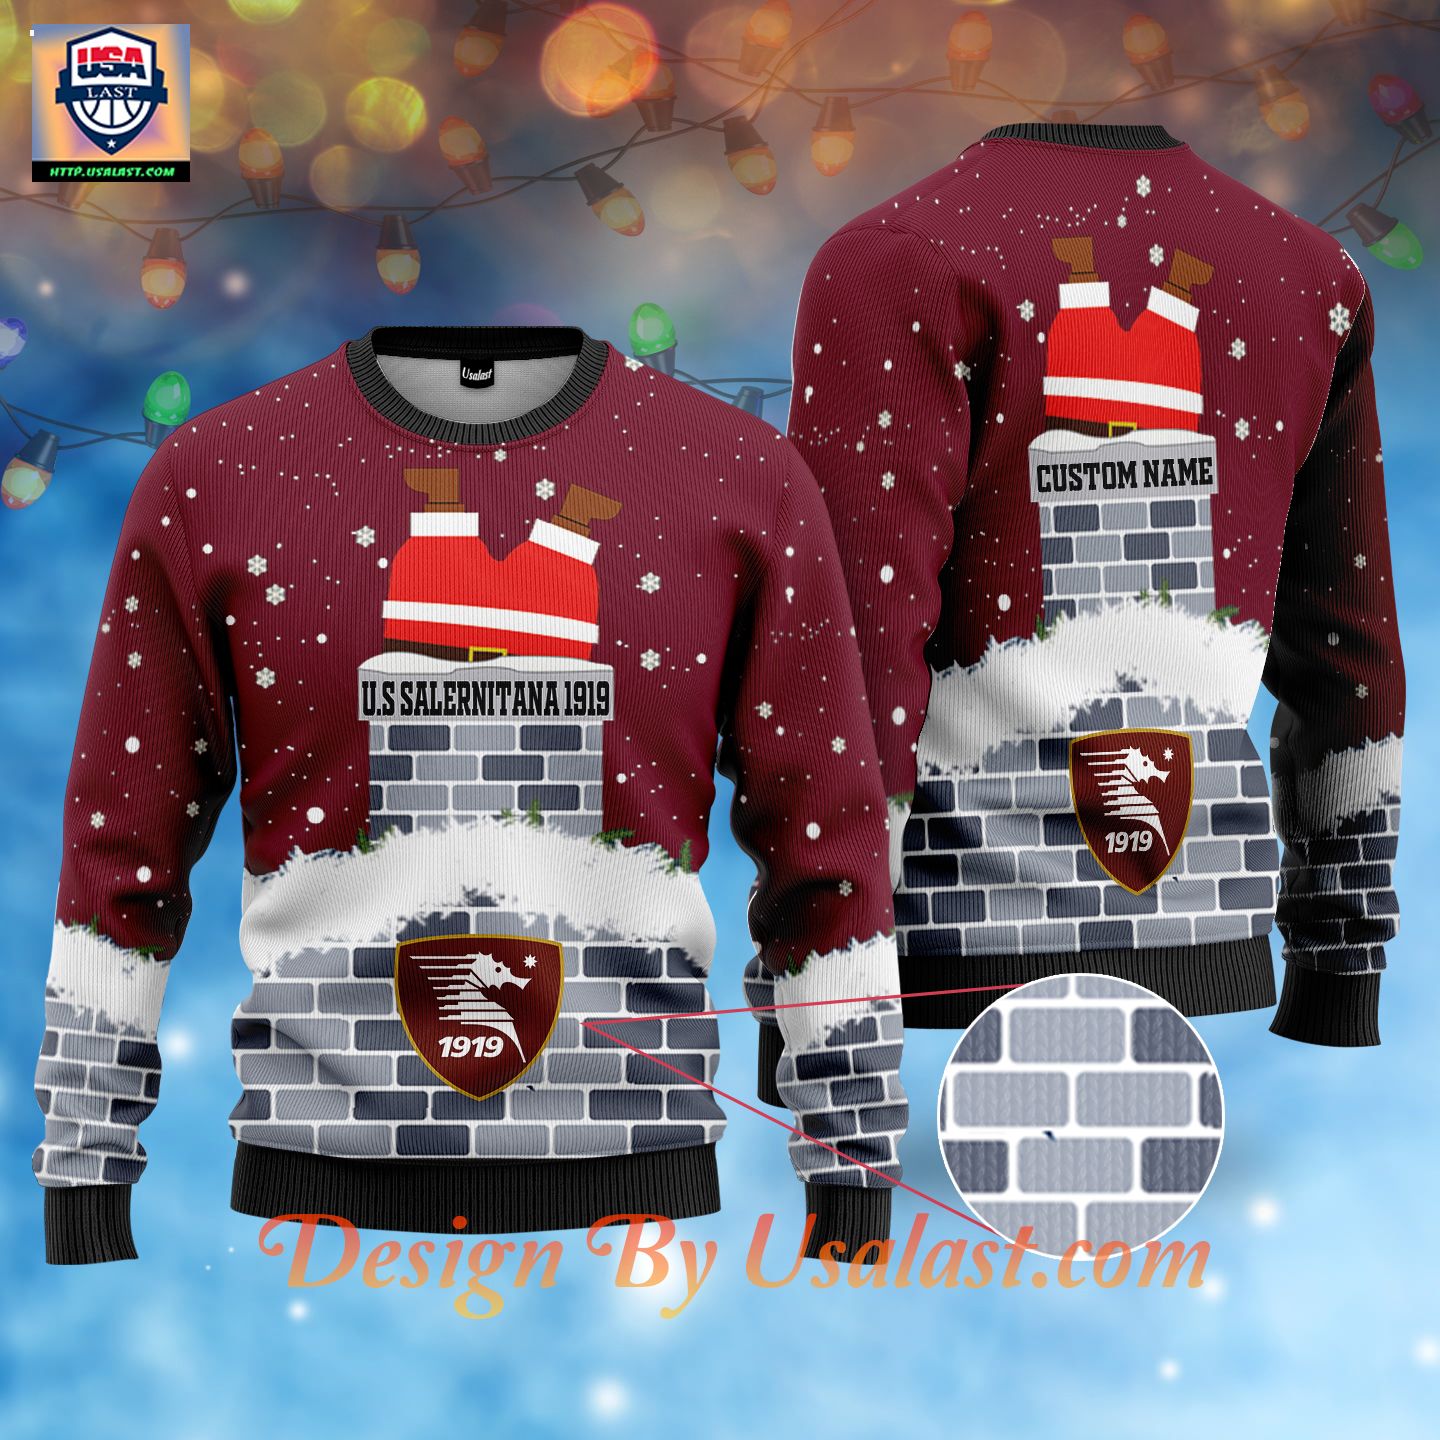 U.S Salernitana 1919 Santa Claus Custom Name Ugly Christmas Sweater - Coolosm